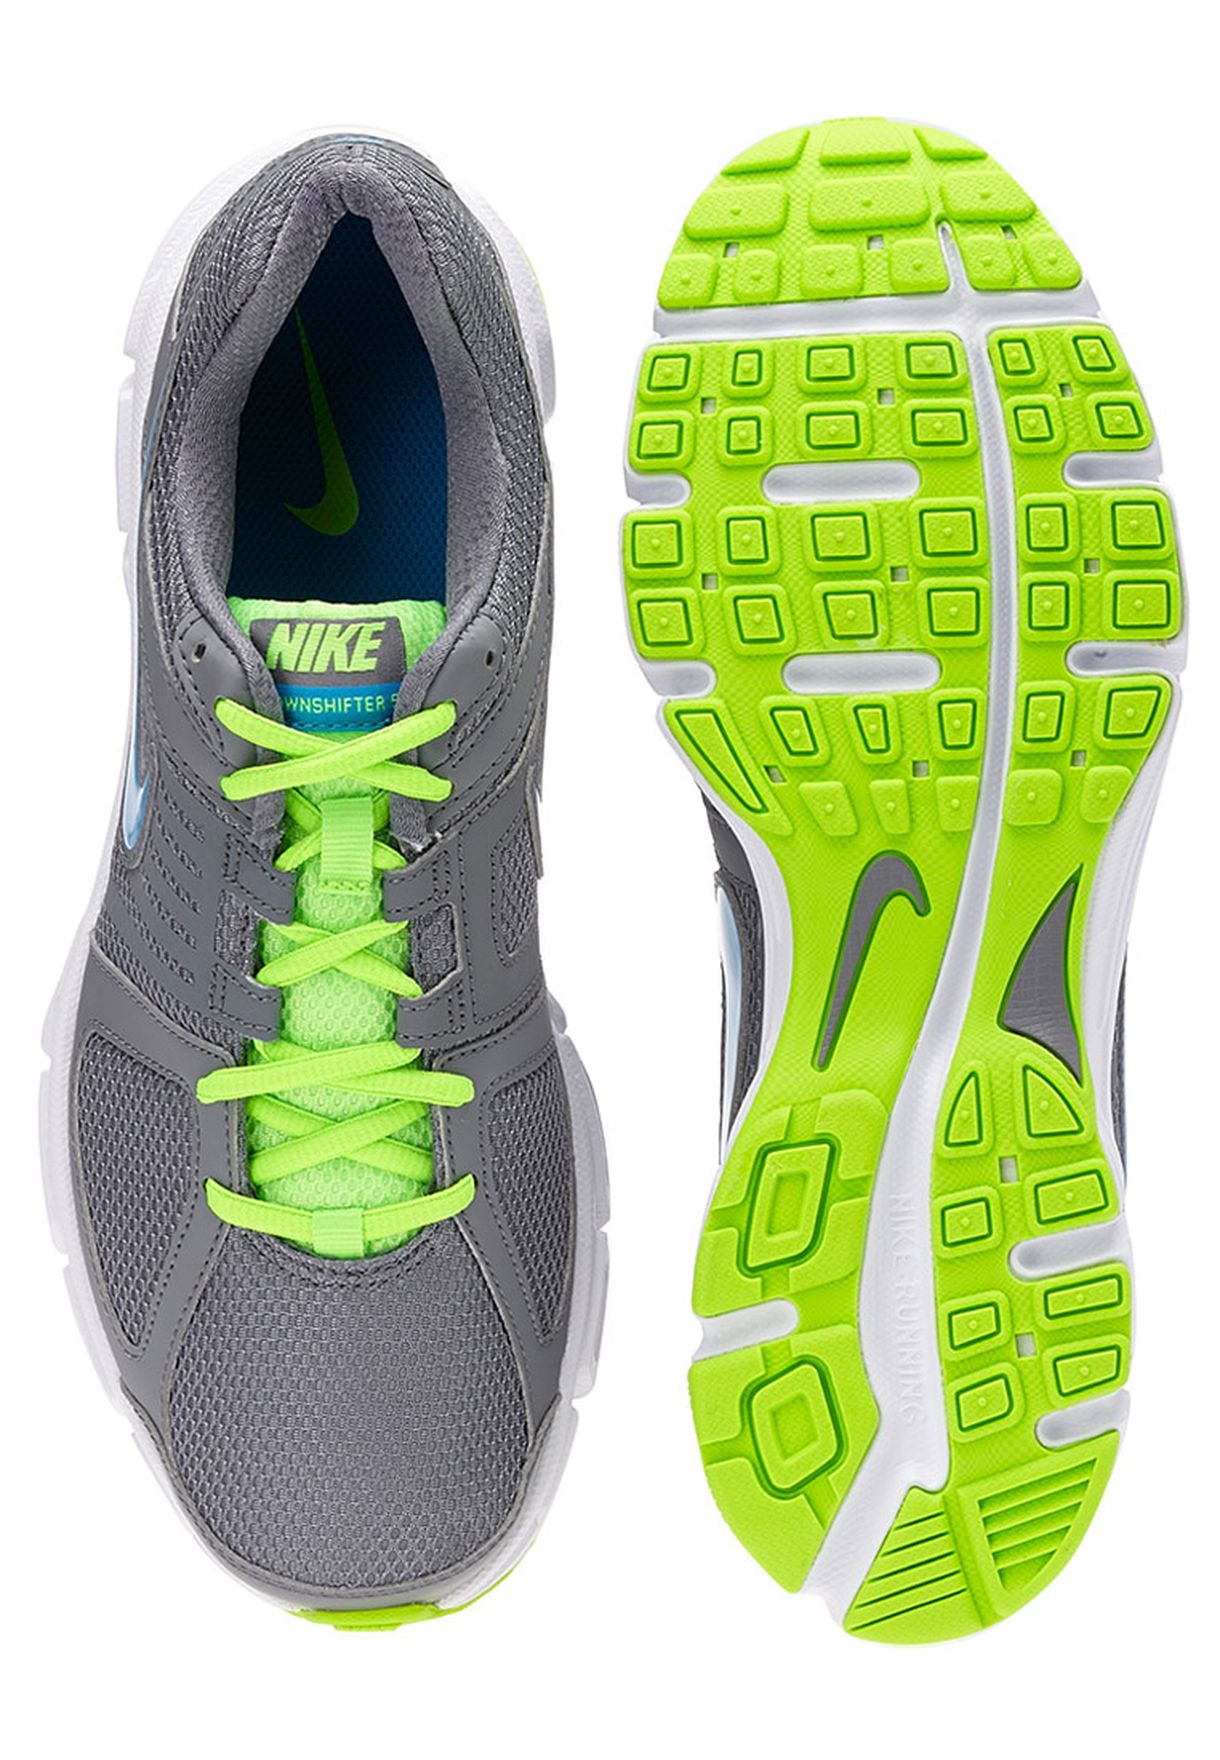 Buy Nike grey Nike Downshifter 5 Msl 